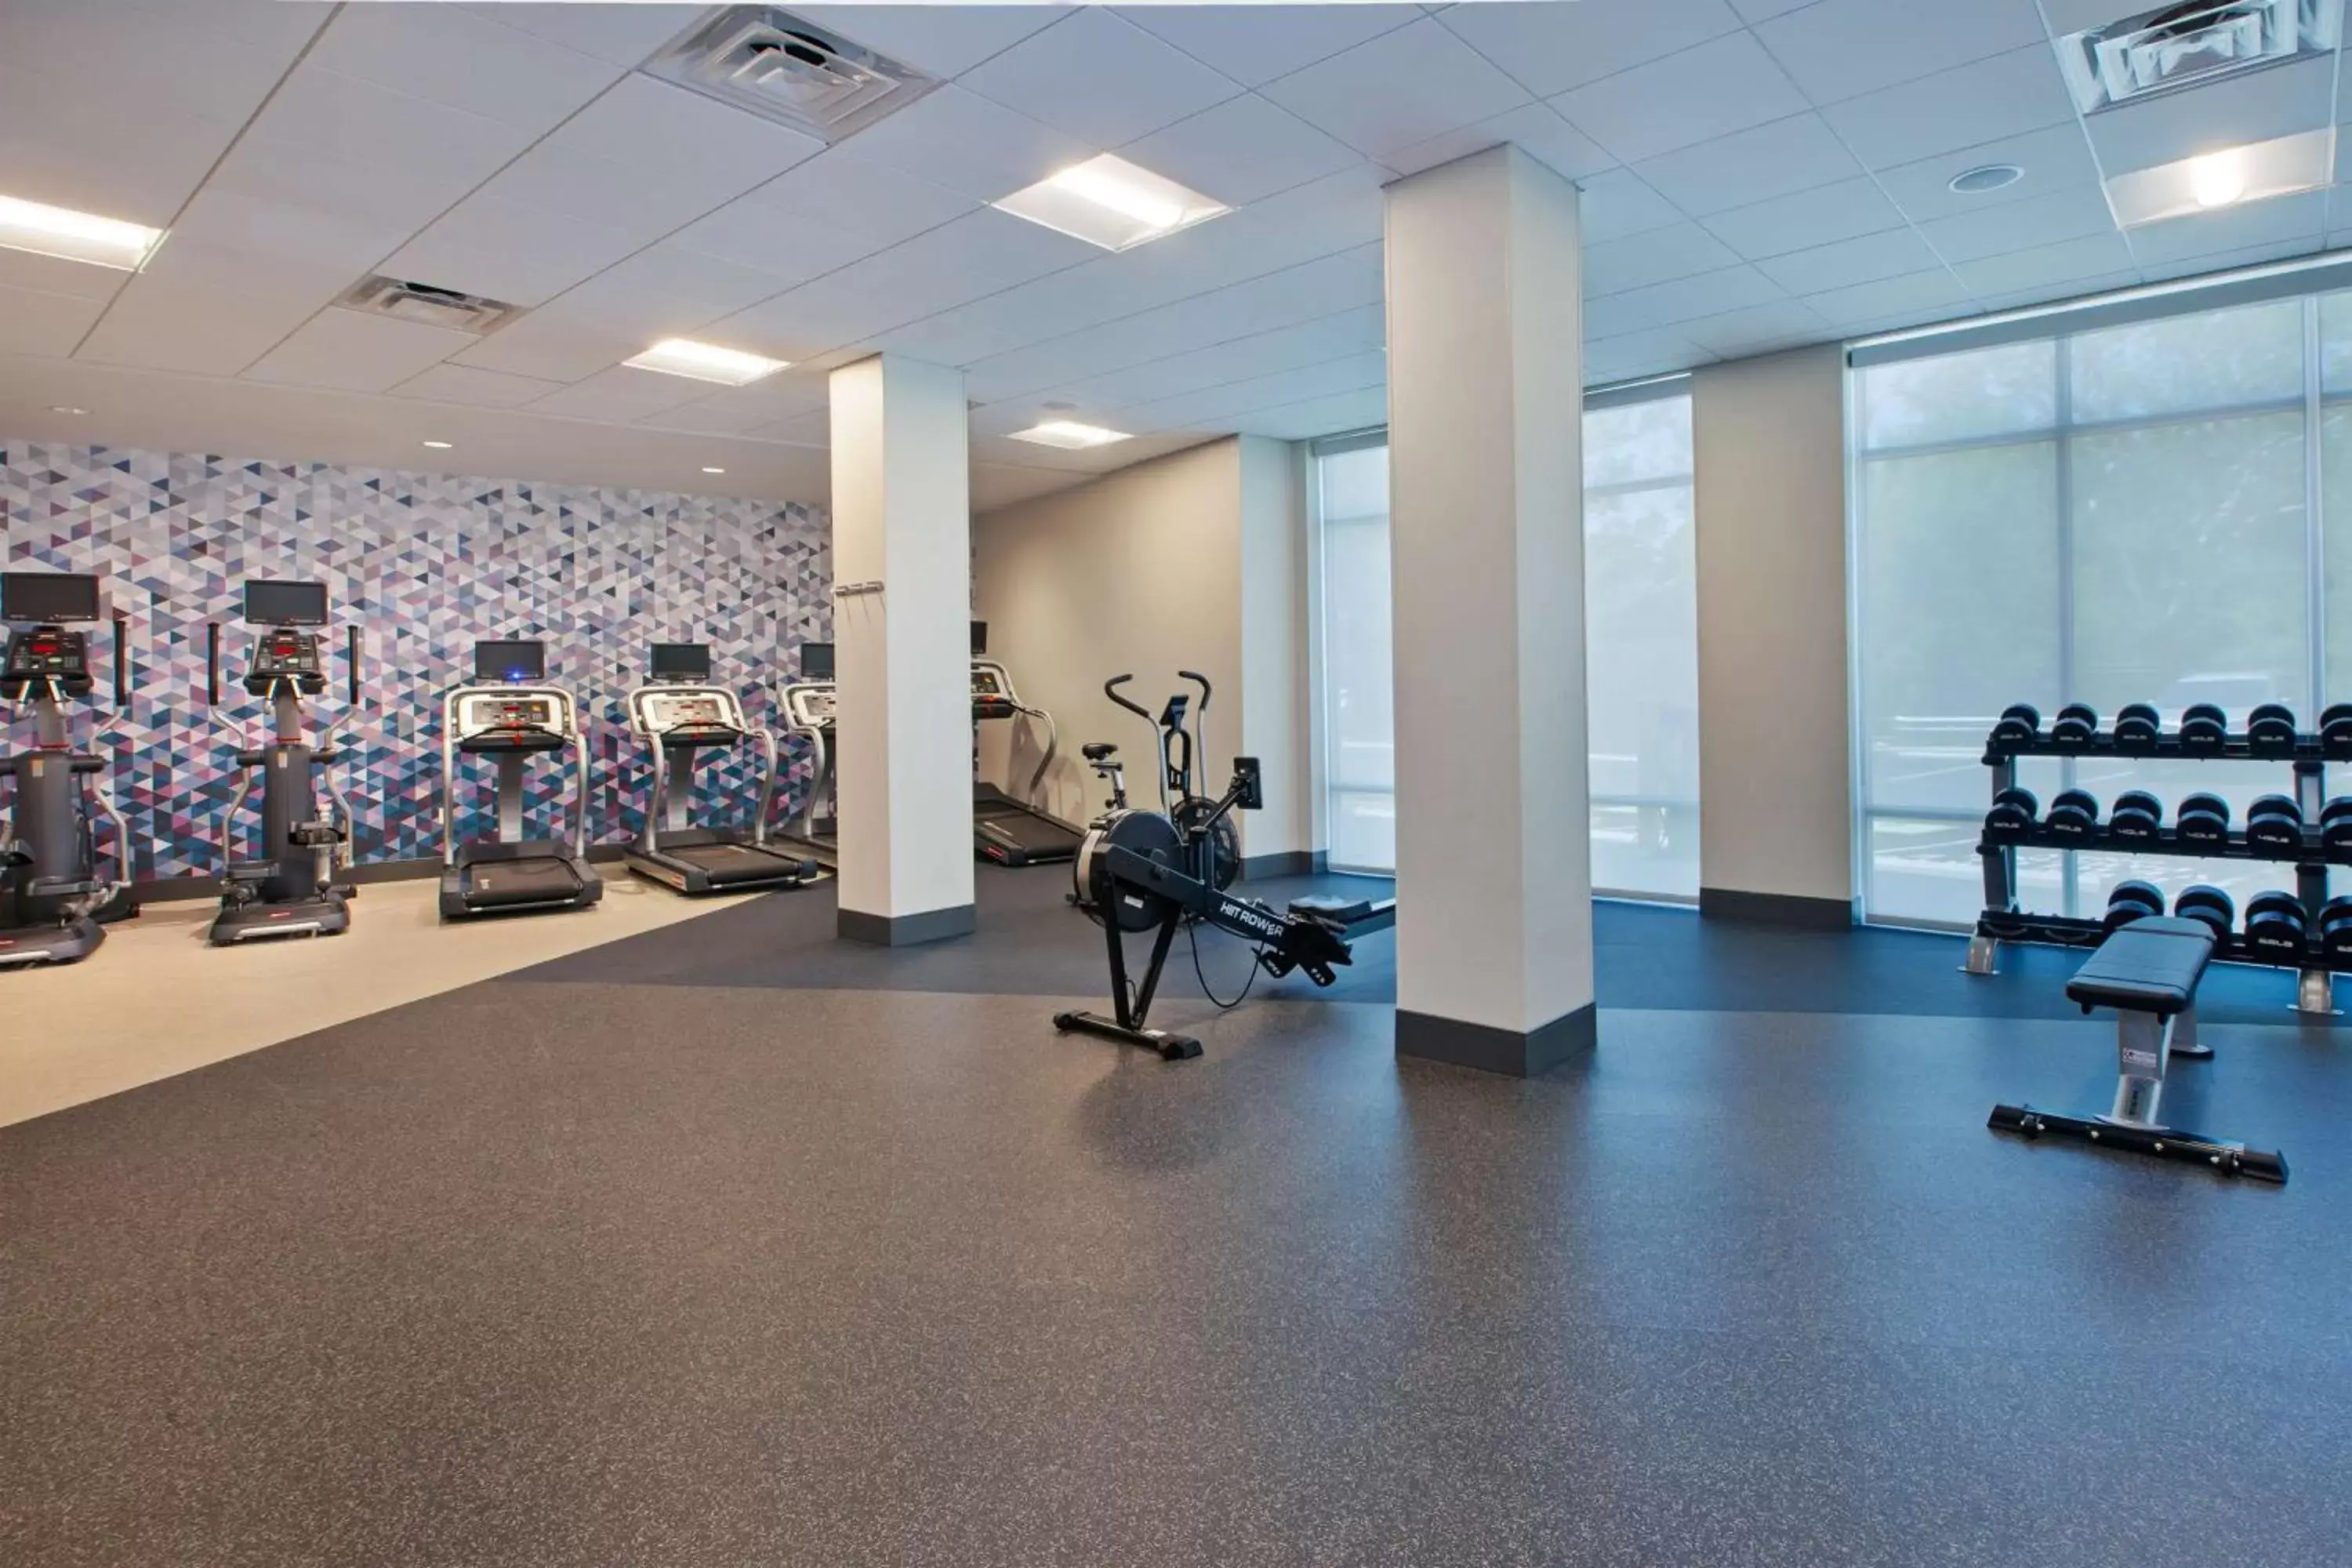 Fitness centre/facilities, Fitness Center/Facilities in Hilton Garden Inn Columbus Easton, Oh